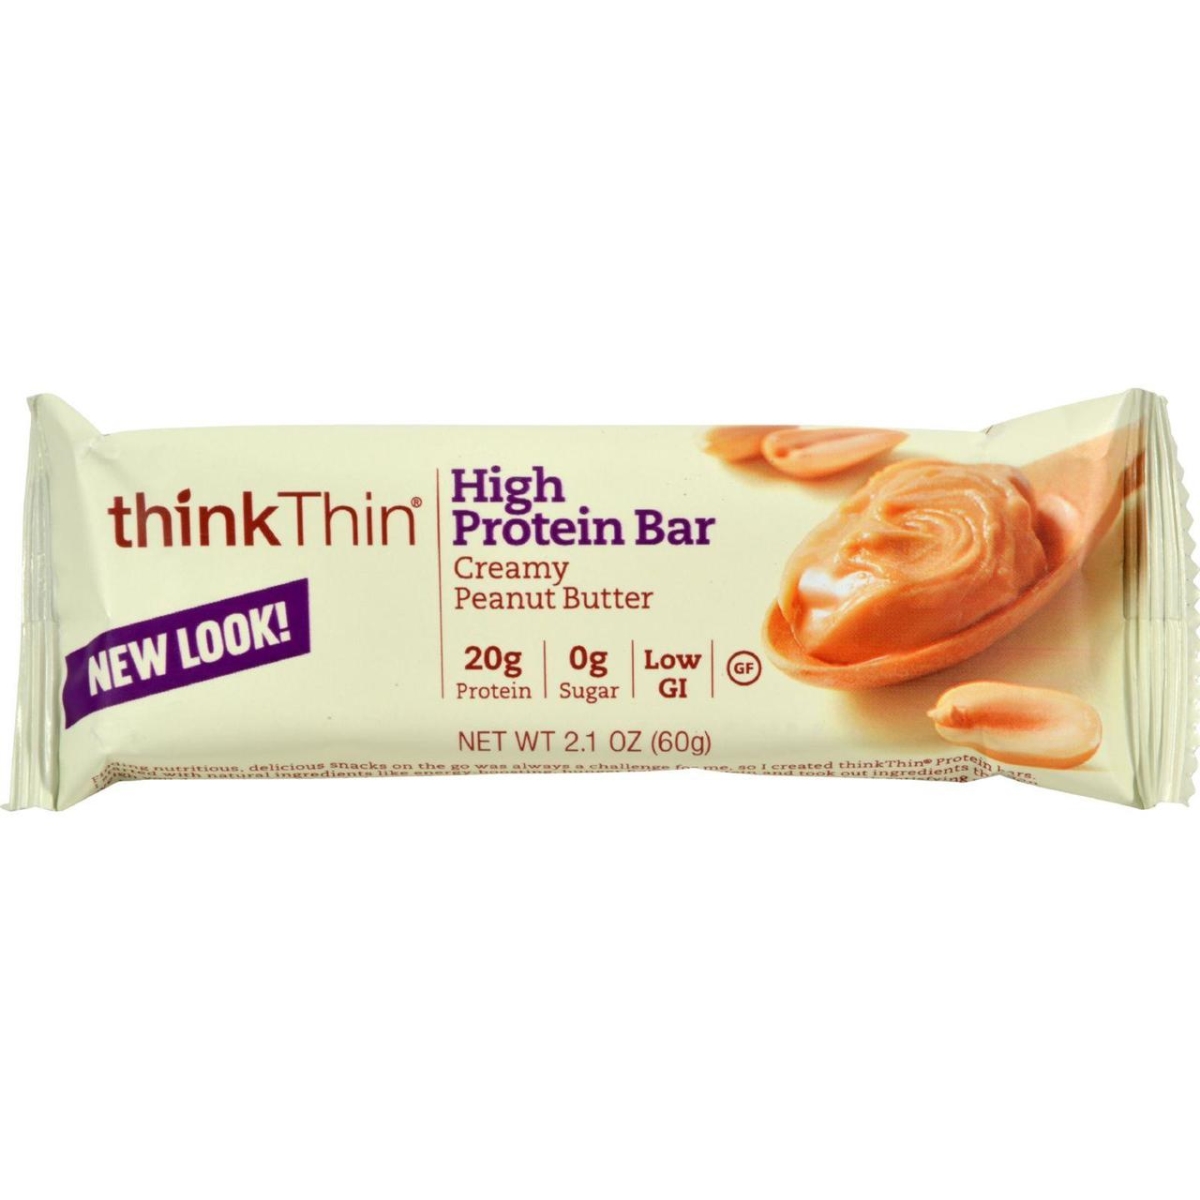 Hg0134155 2.1 Oz Thin Bar, Creamy Peanut Butter - Case Of 10